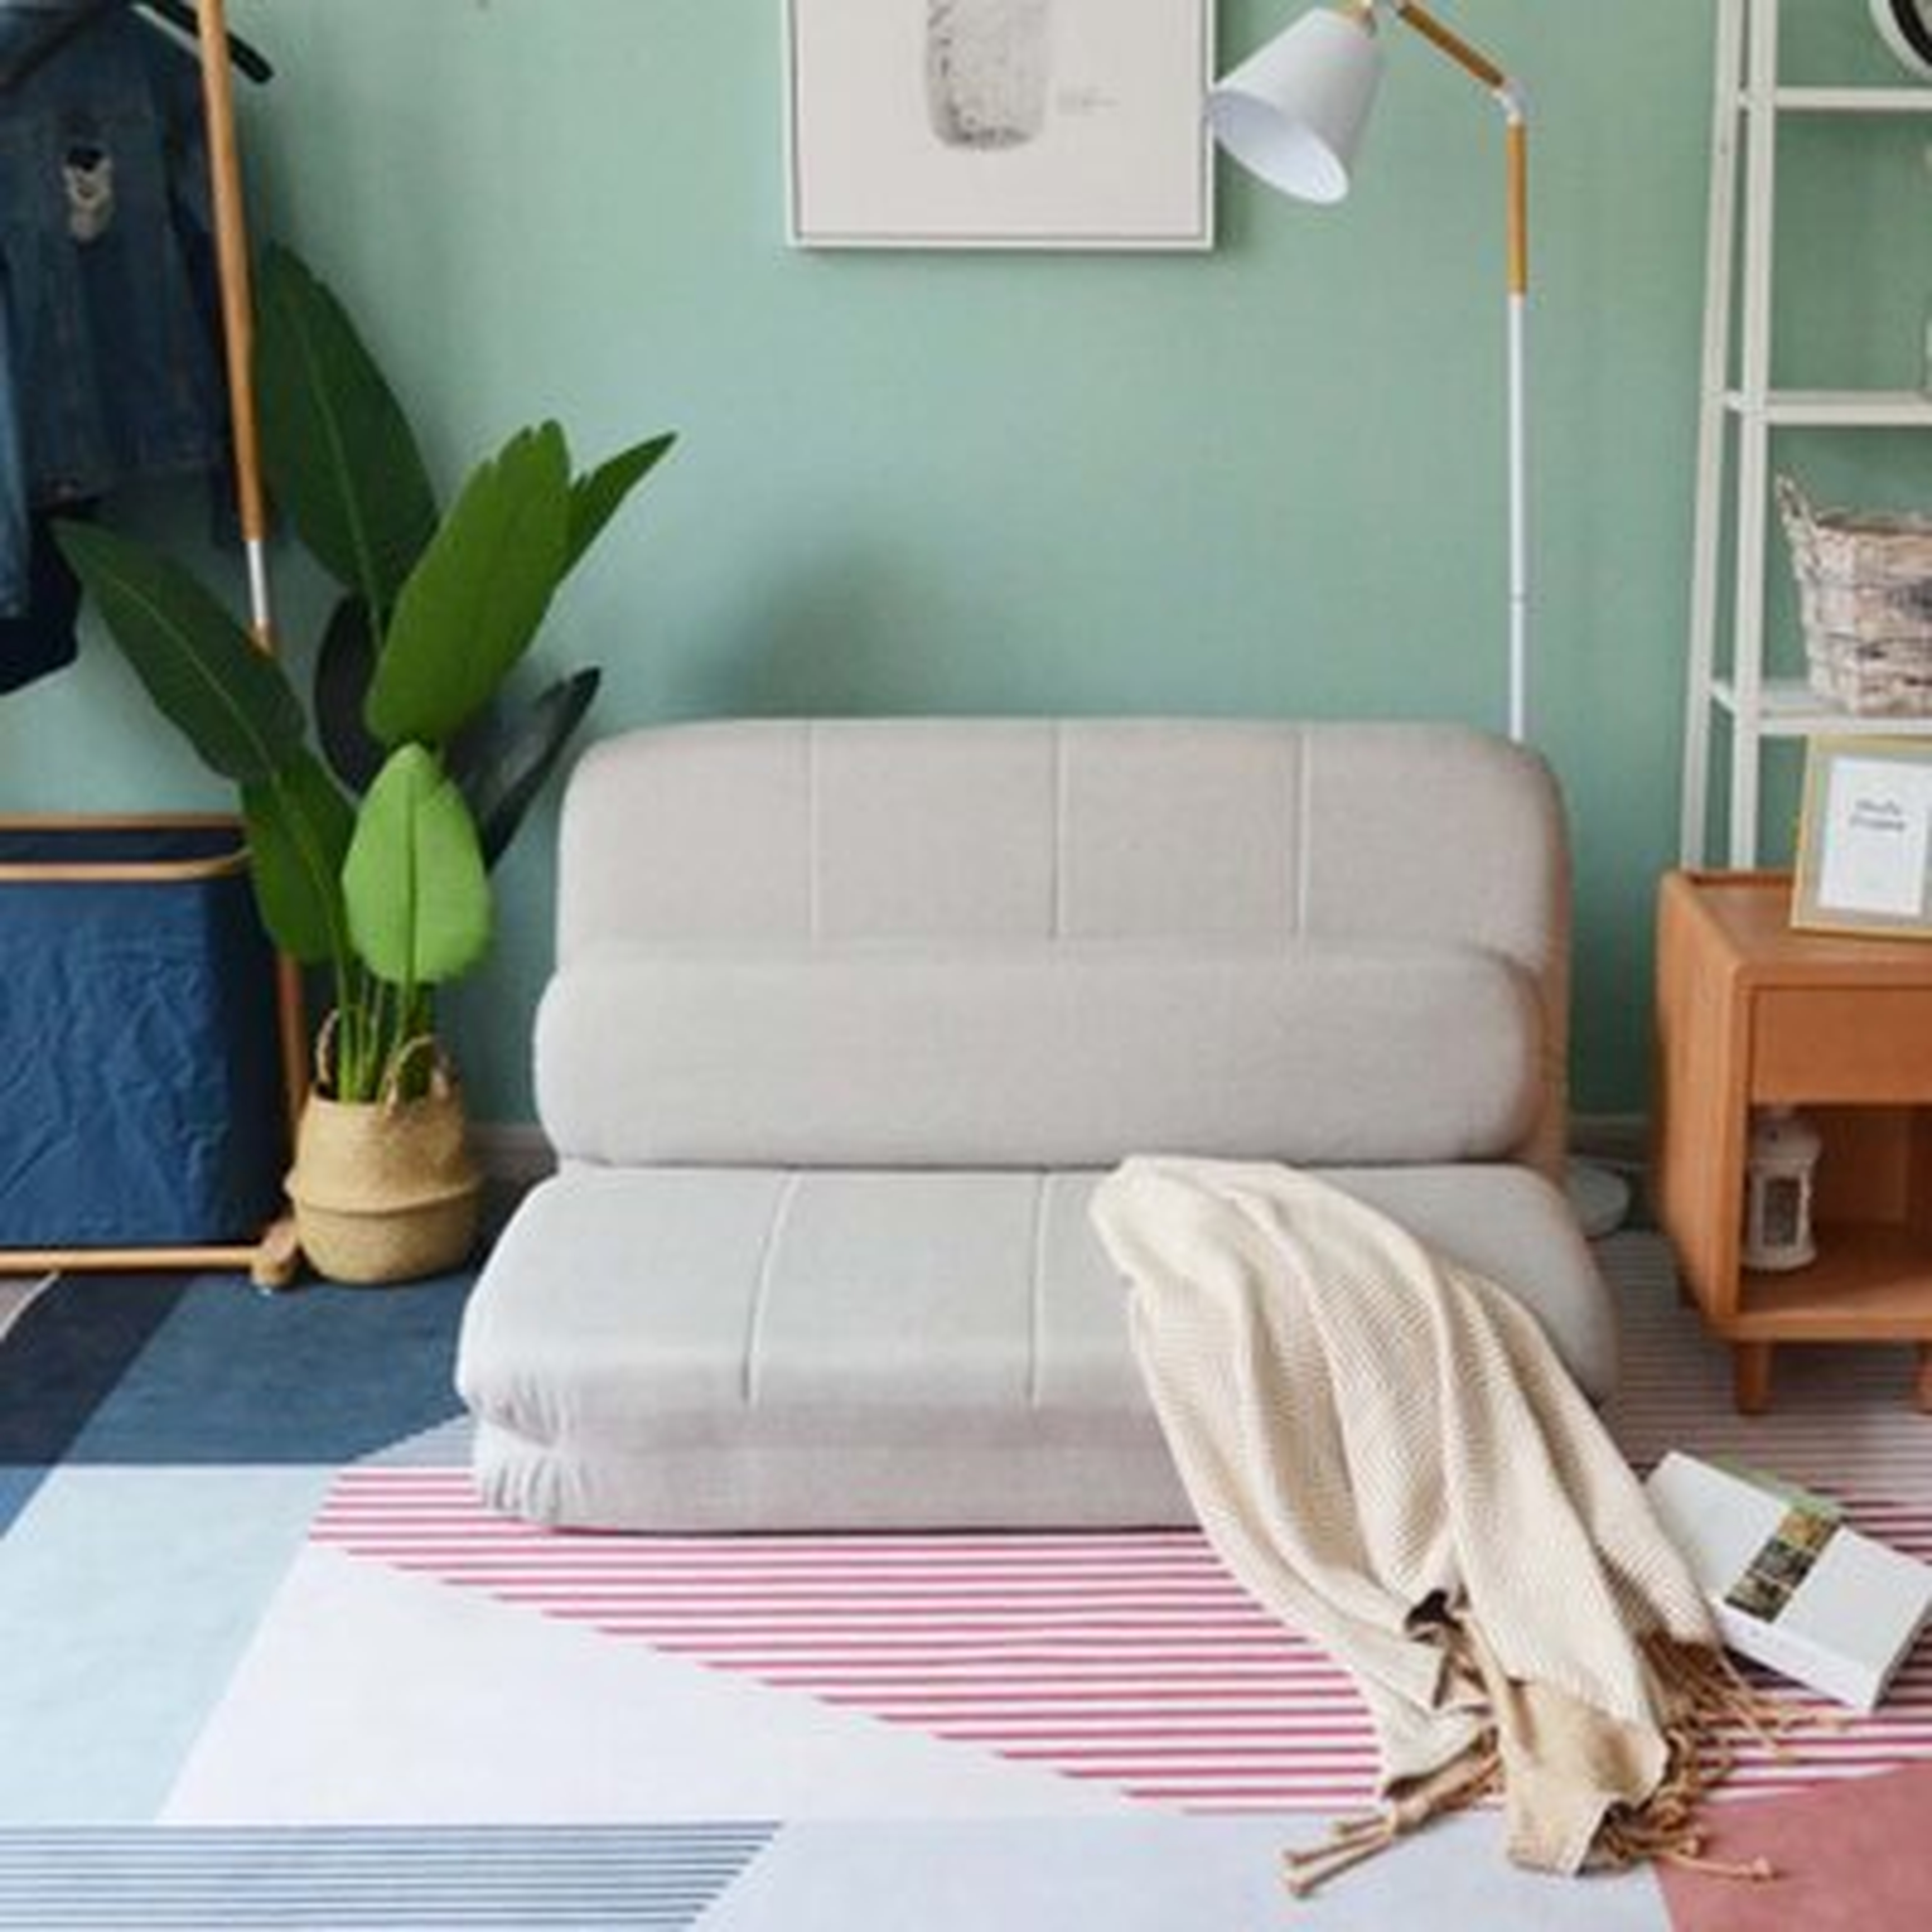 Floor Chair Adjustable Foldable Sofa Bed Rest Room Floor Mattress Recliner Sofa And Pillow - Wayfair